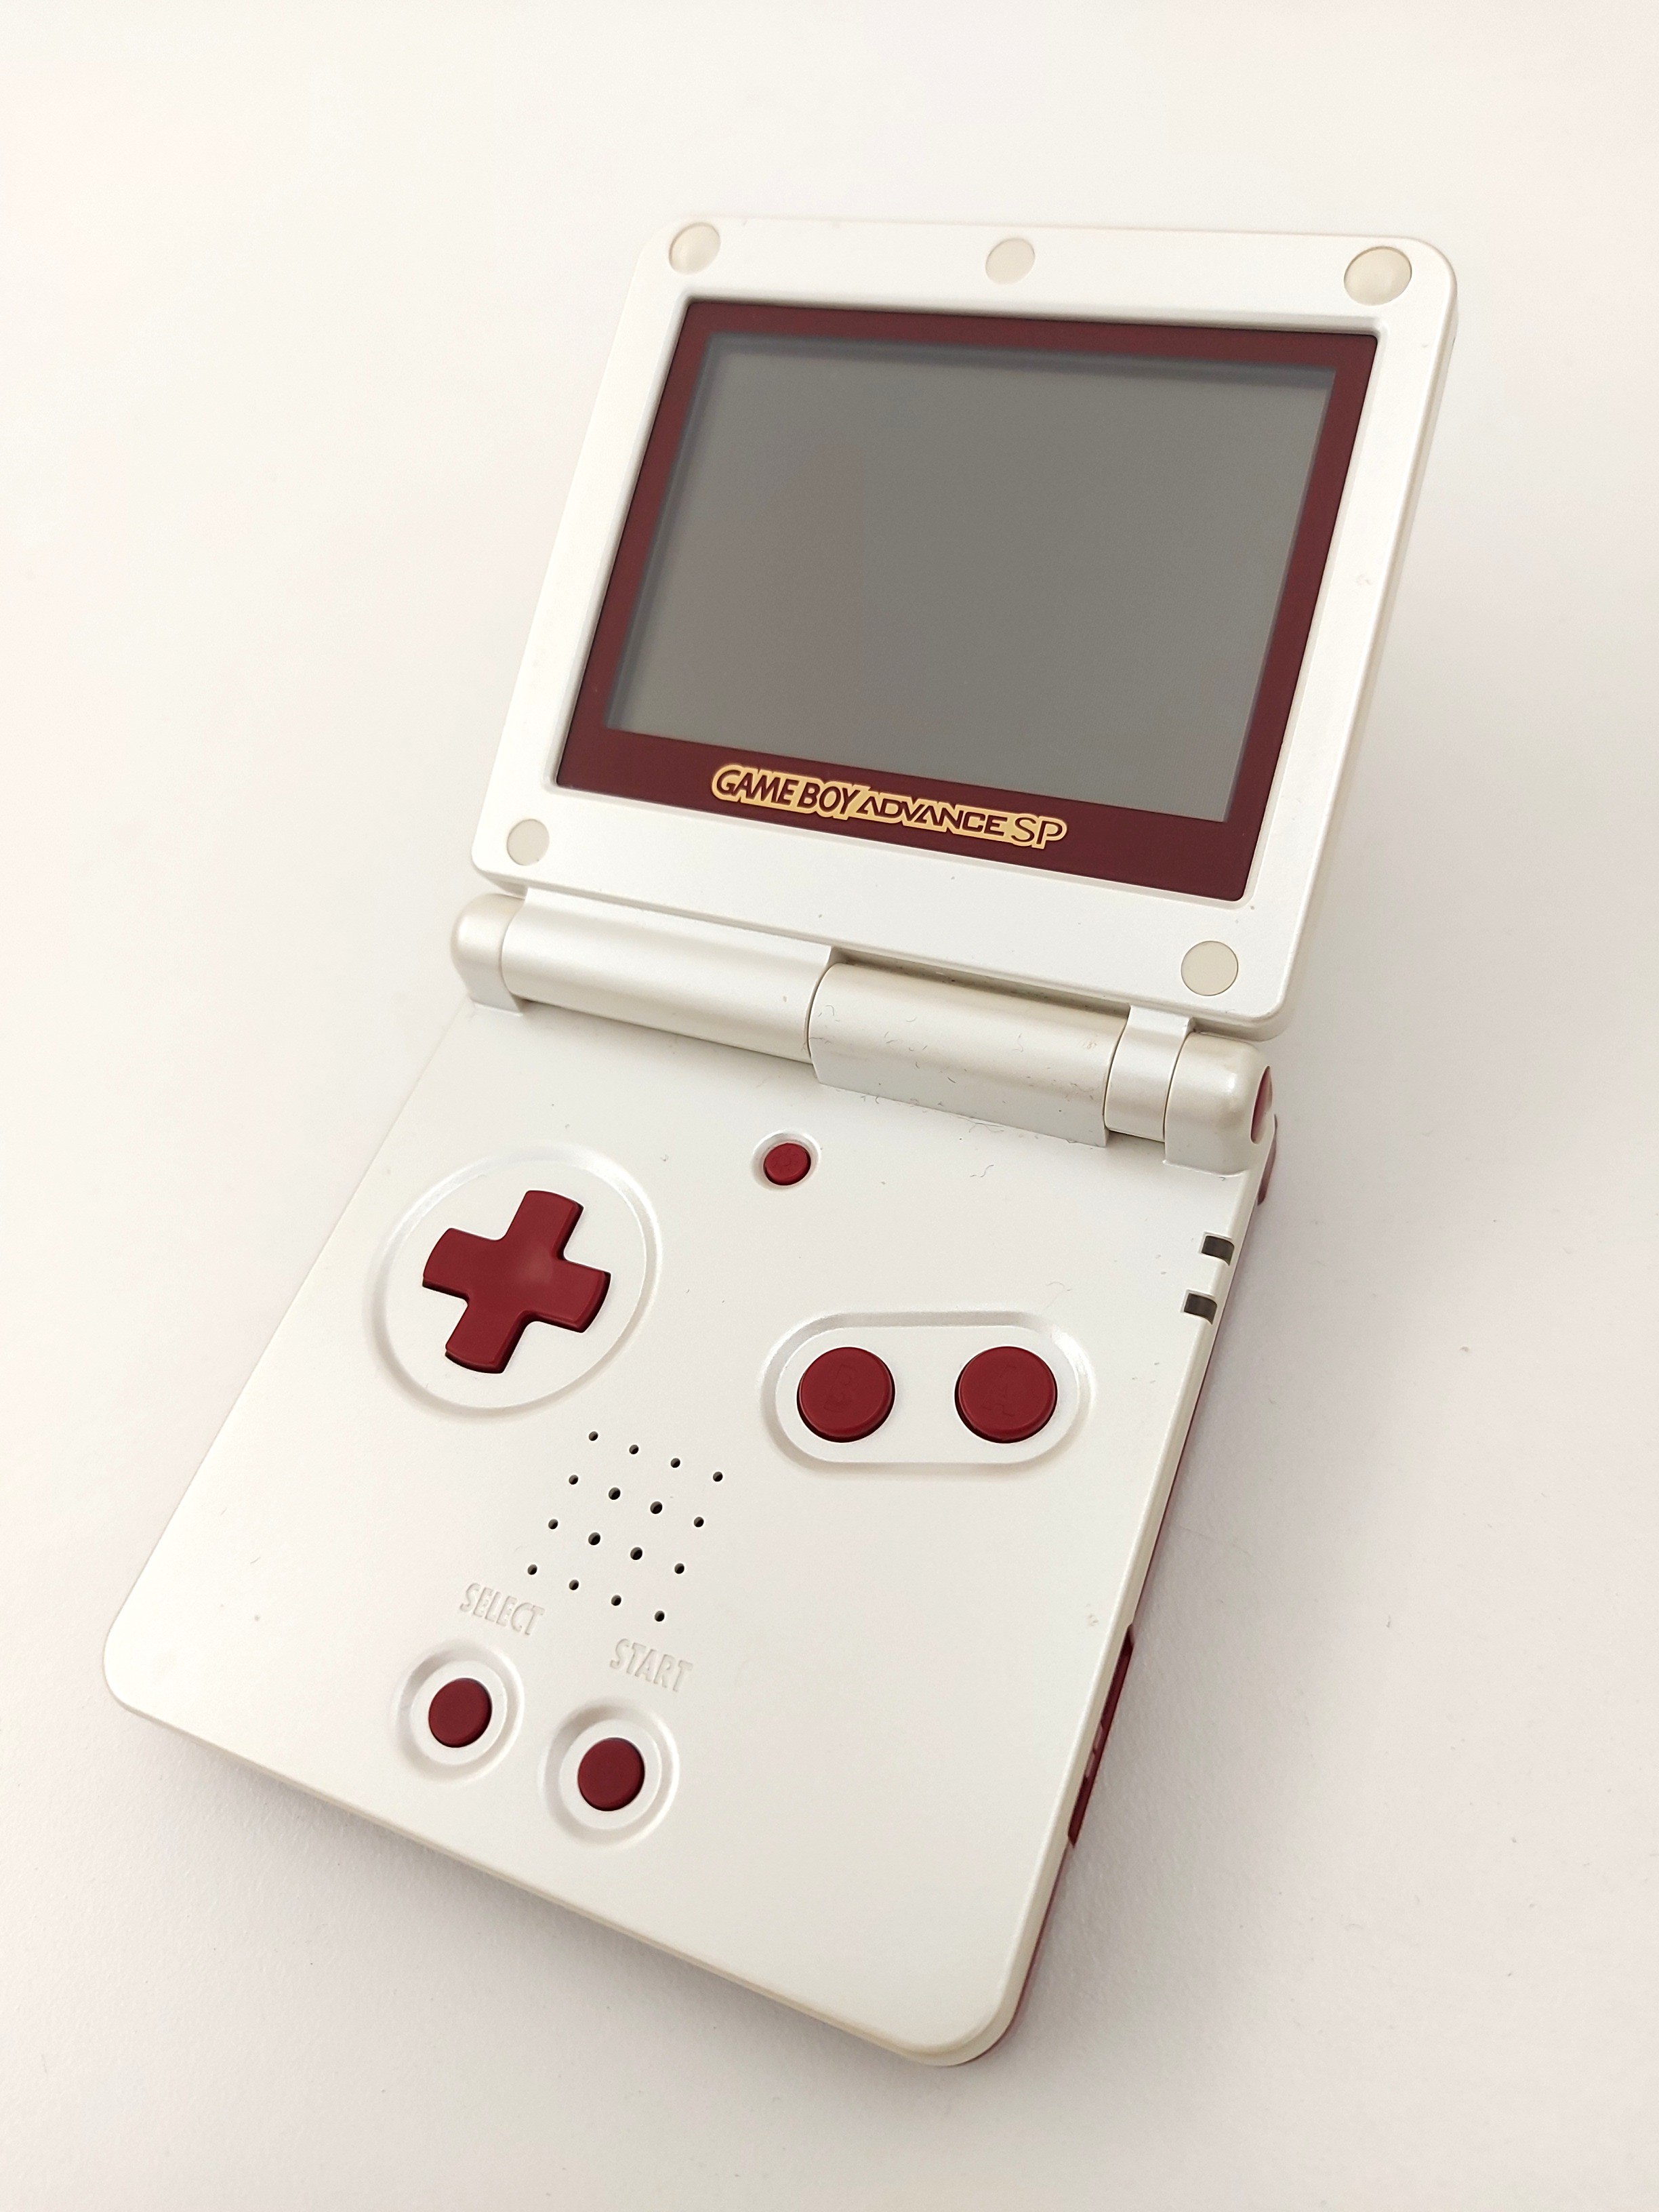 Gameboy advance SP 紅白機版, 電子遊戲, 電子遊戲機, Nintendo 任天堂